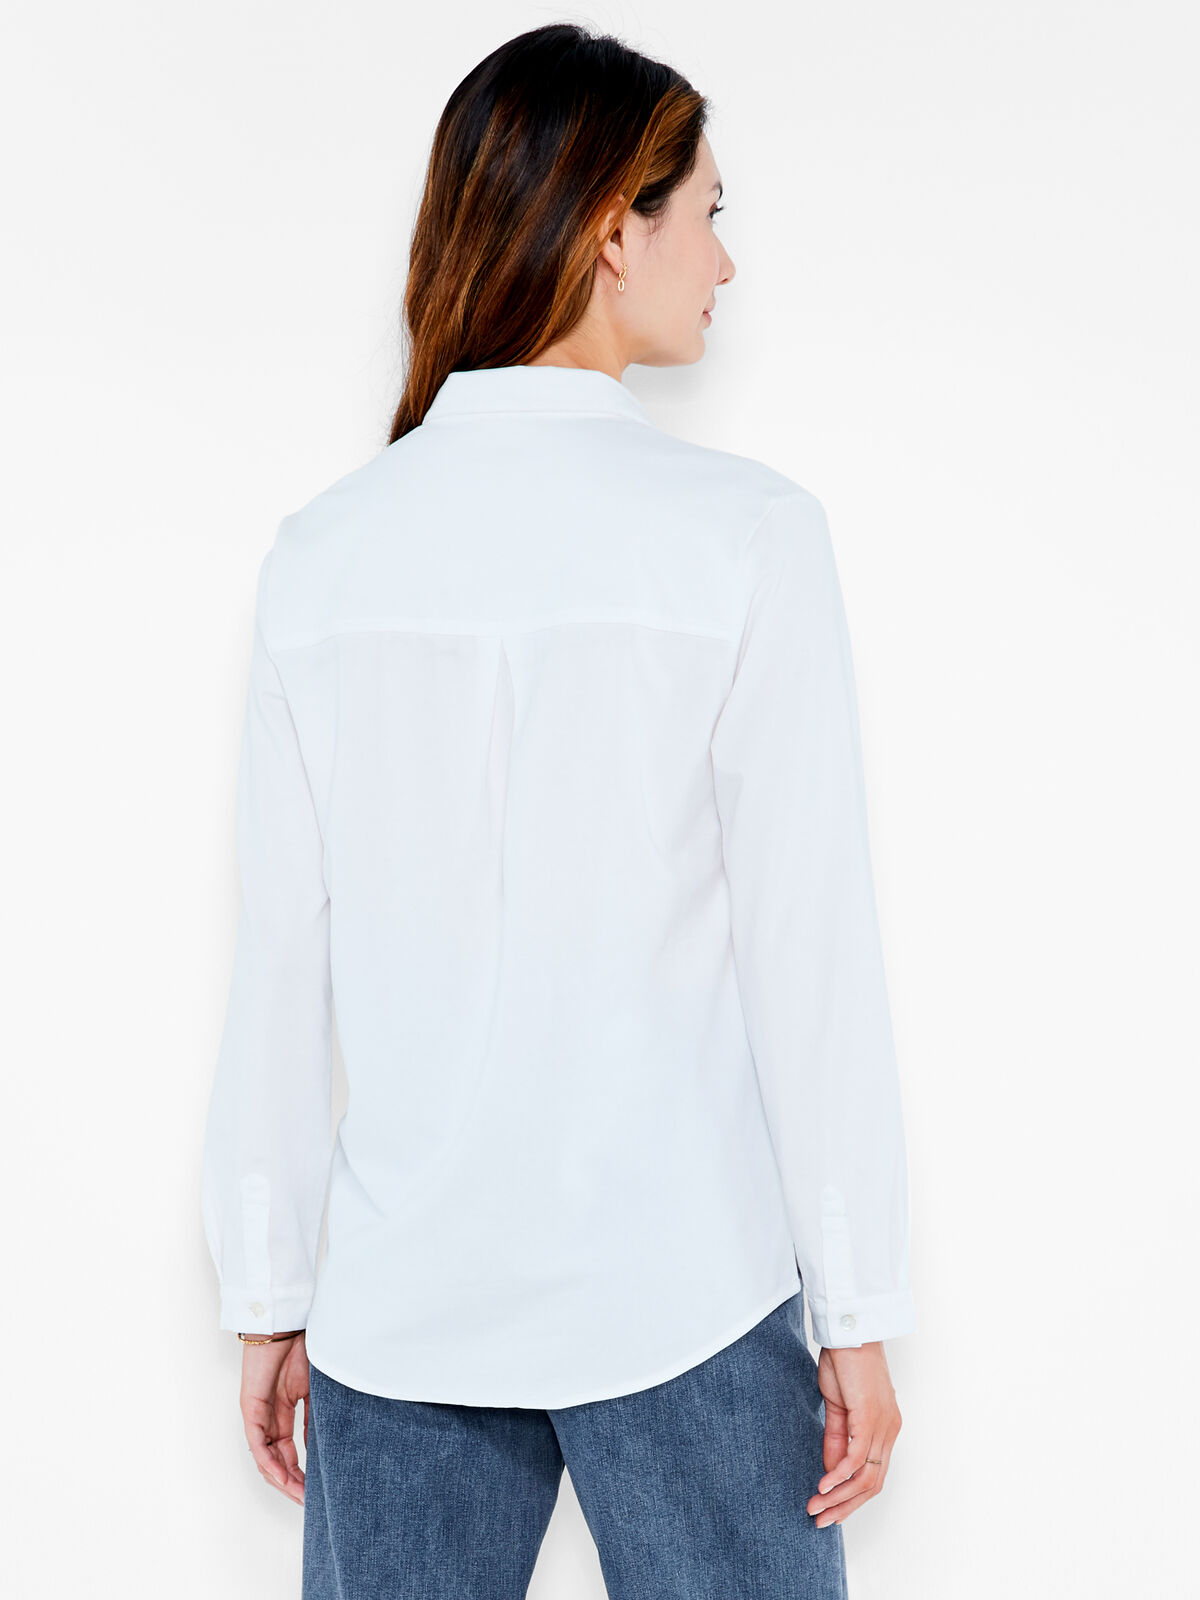 NZT Long Sleeve Angled Pocket Shirt